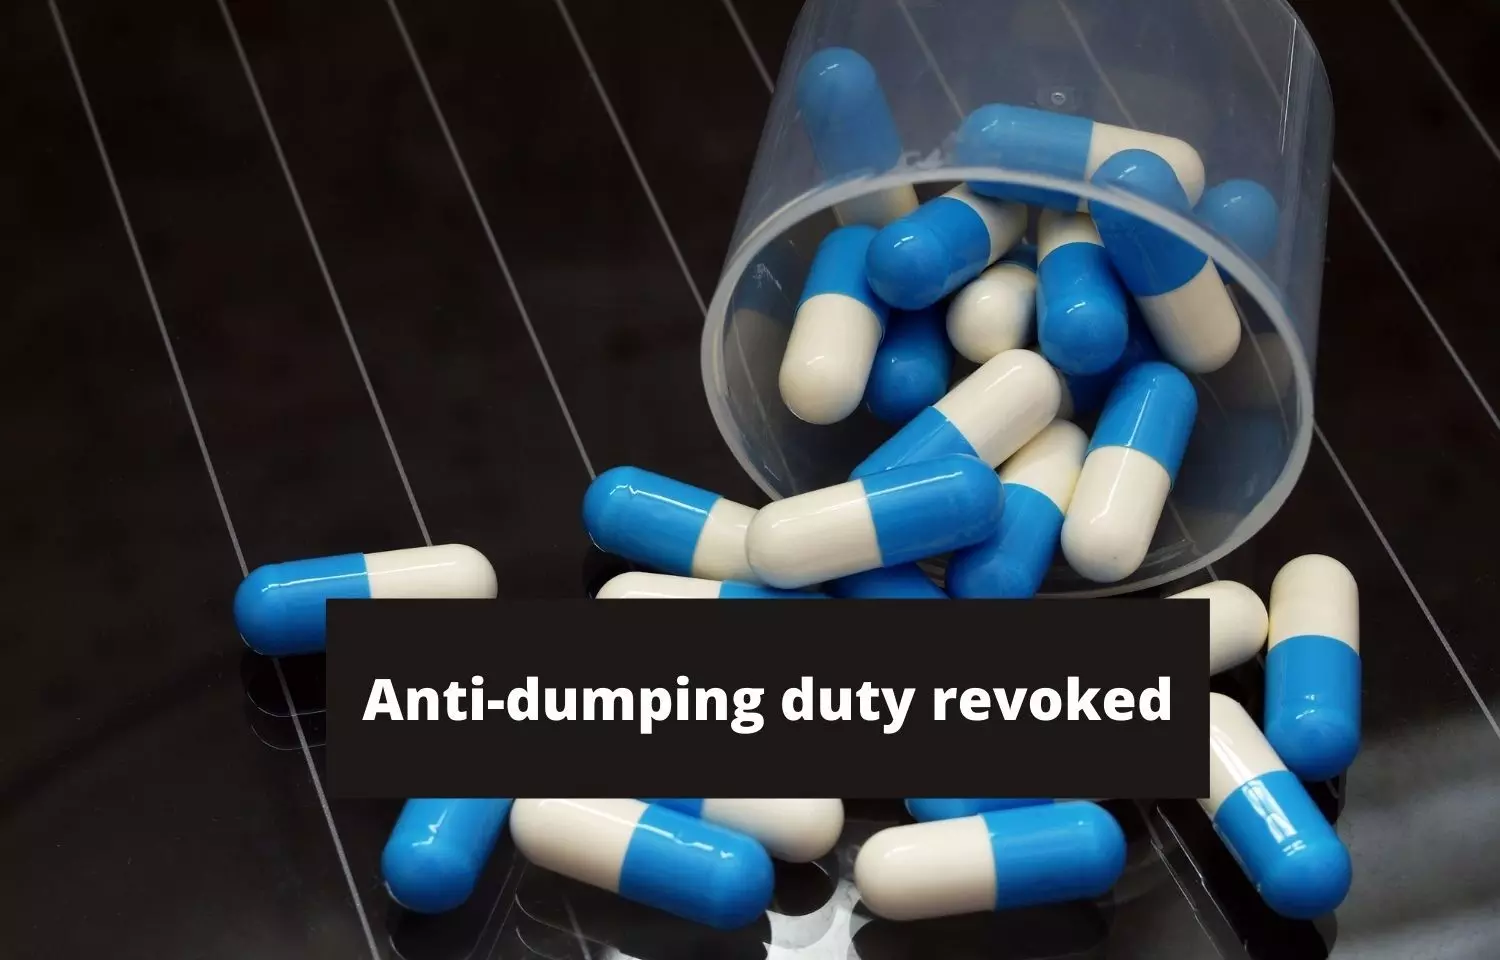 Government revokes anti-dumping duty imposed on Amoxicillin imports from China